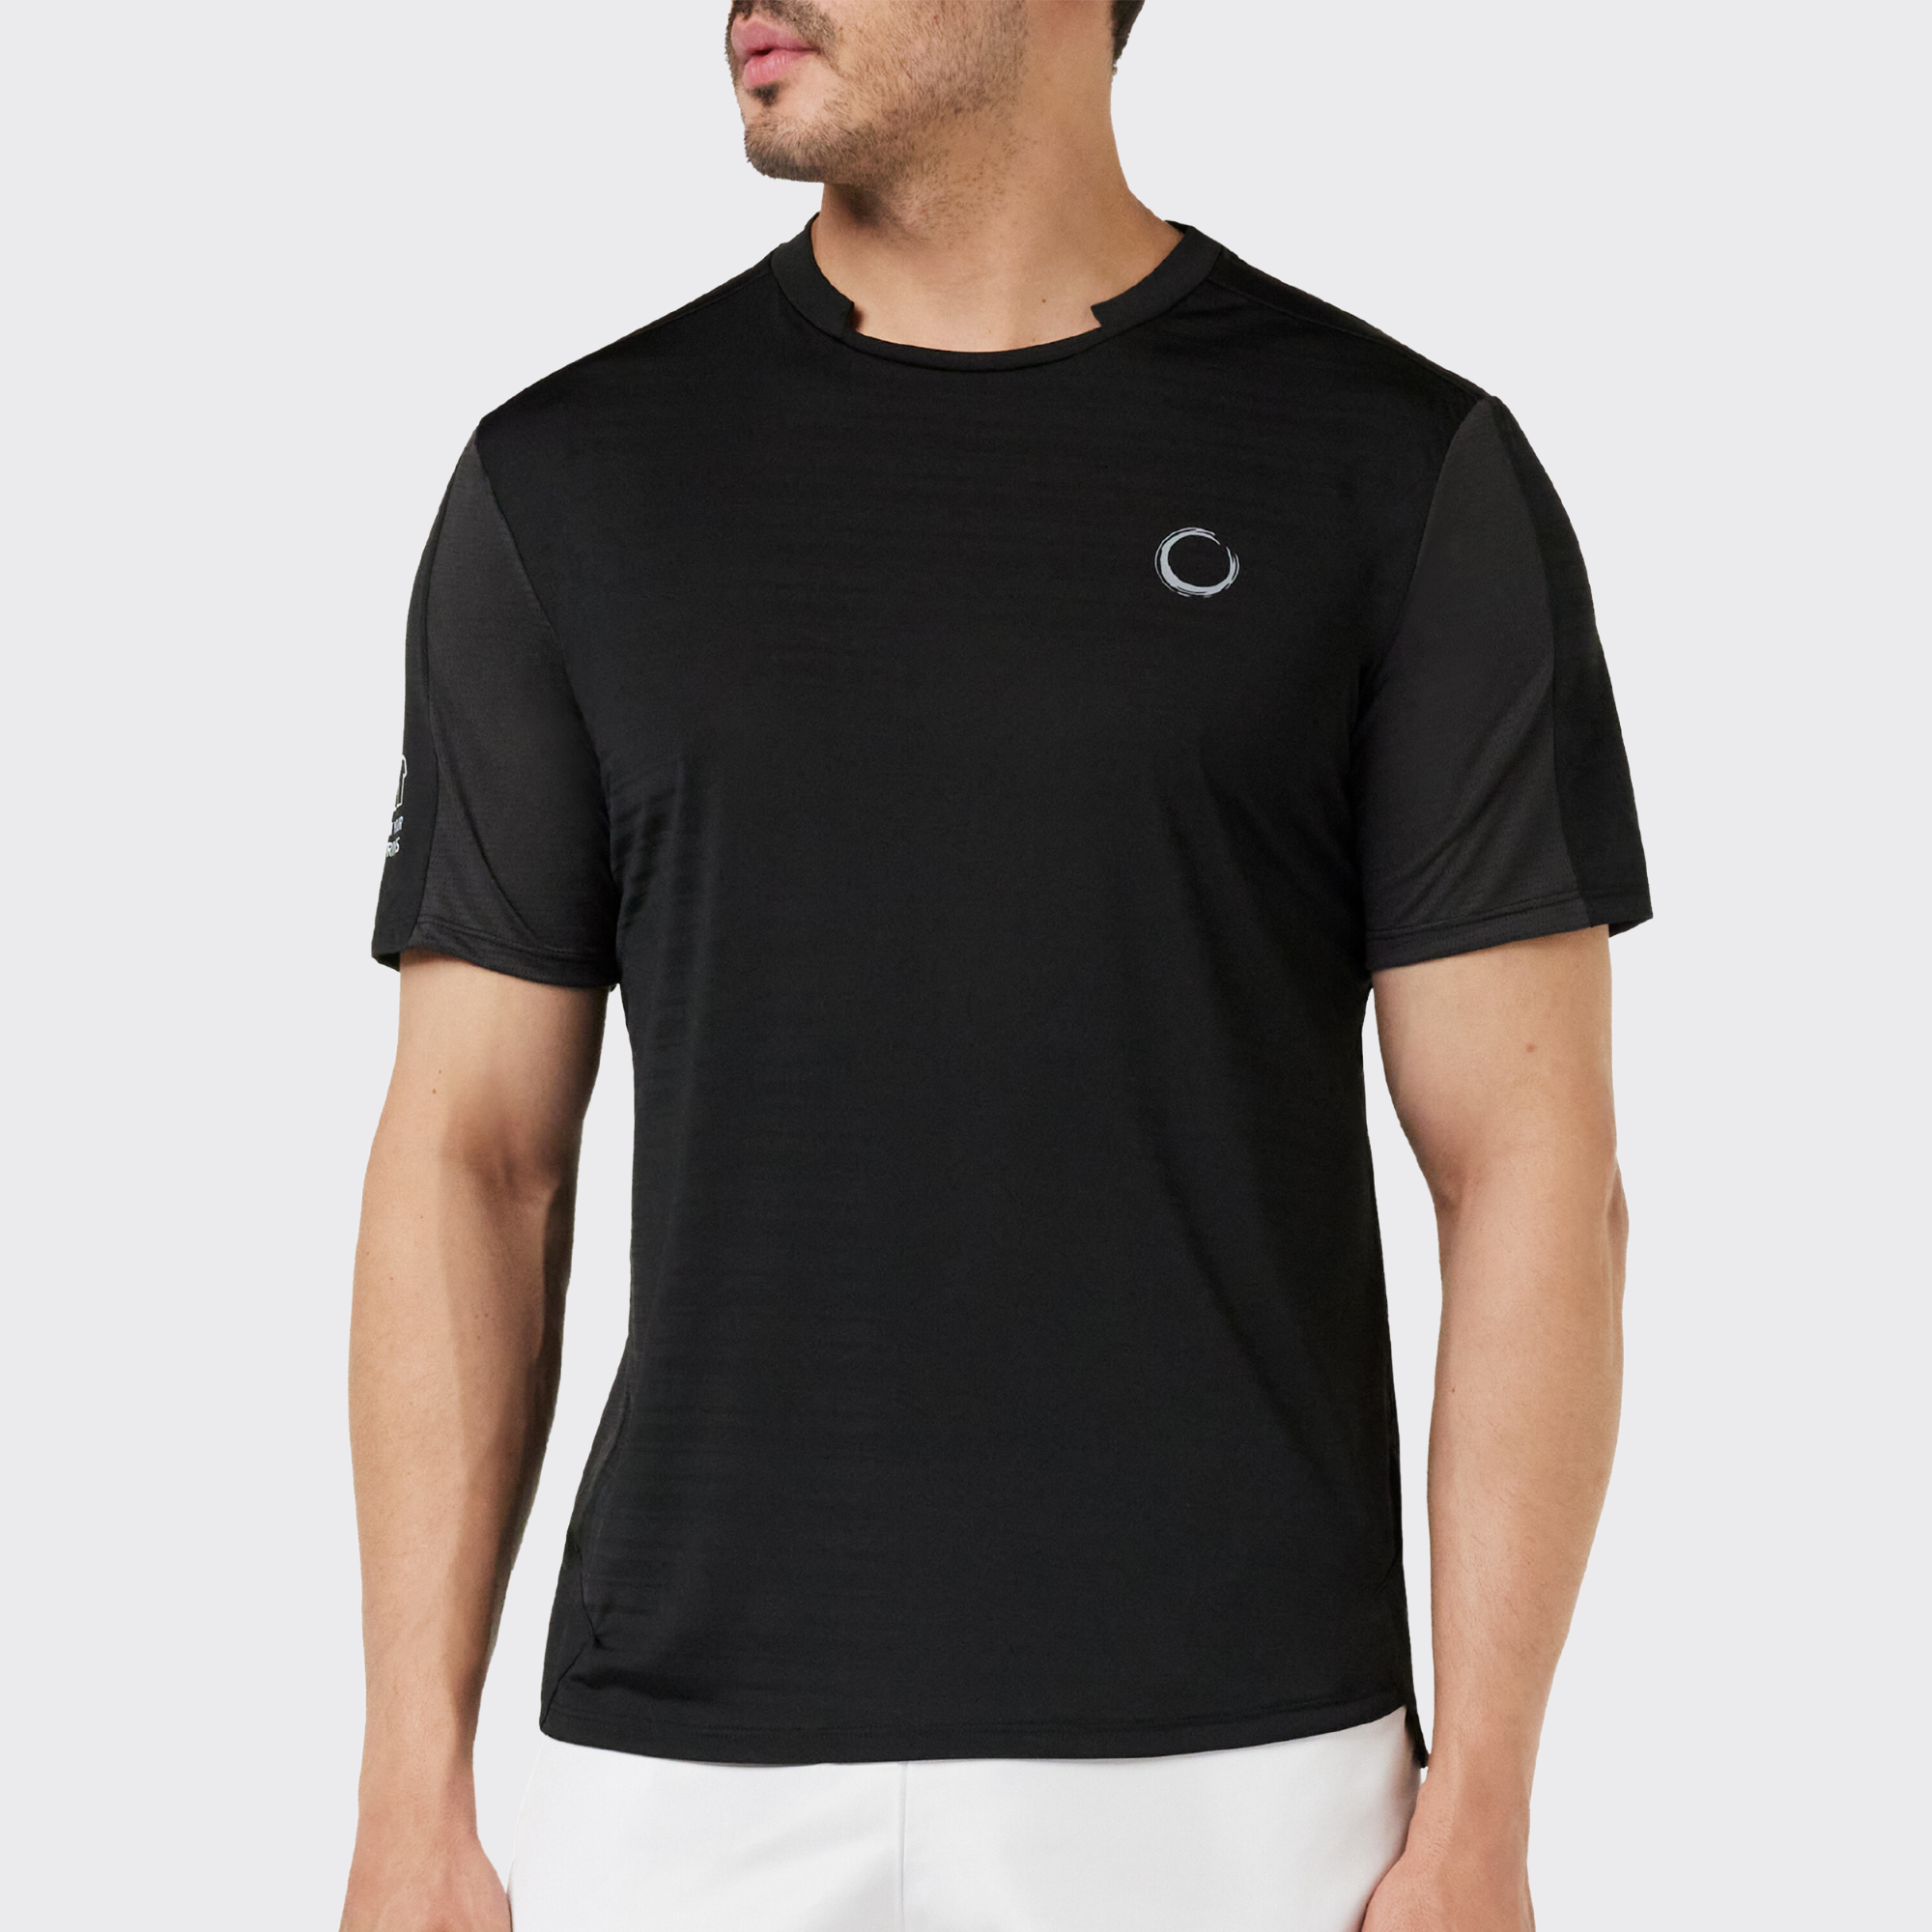 Camiseta deportiva hombre, color negro manga corta - racketball movil